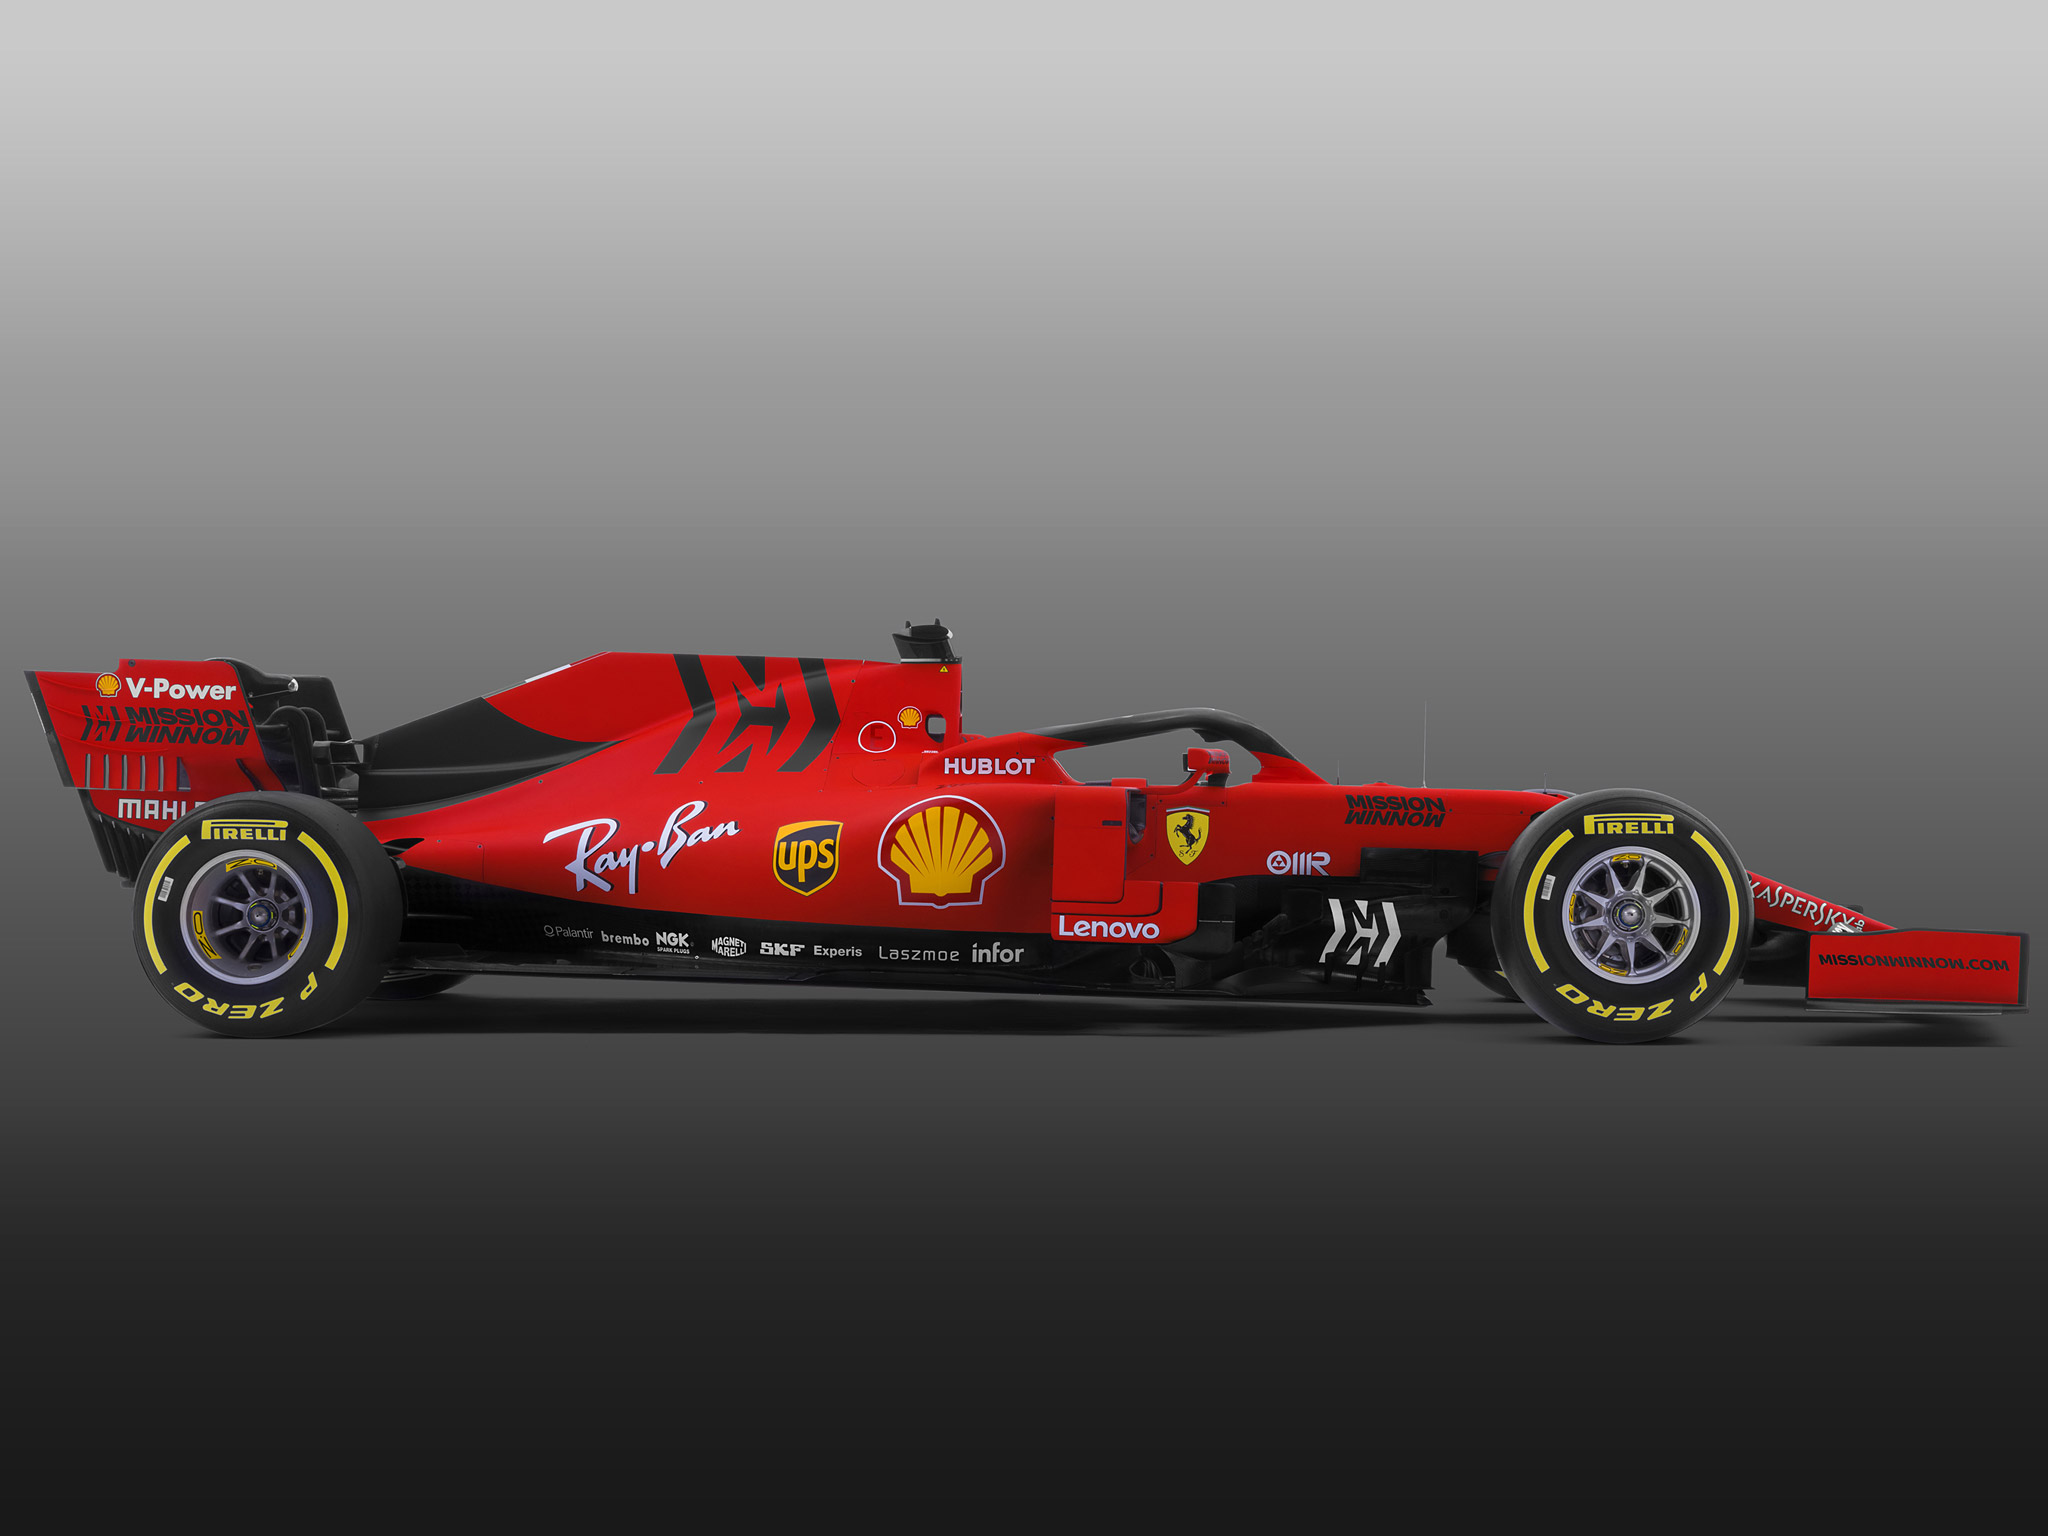  2019 Ferrari SF90 Wallpaper.